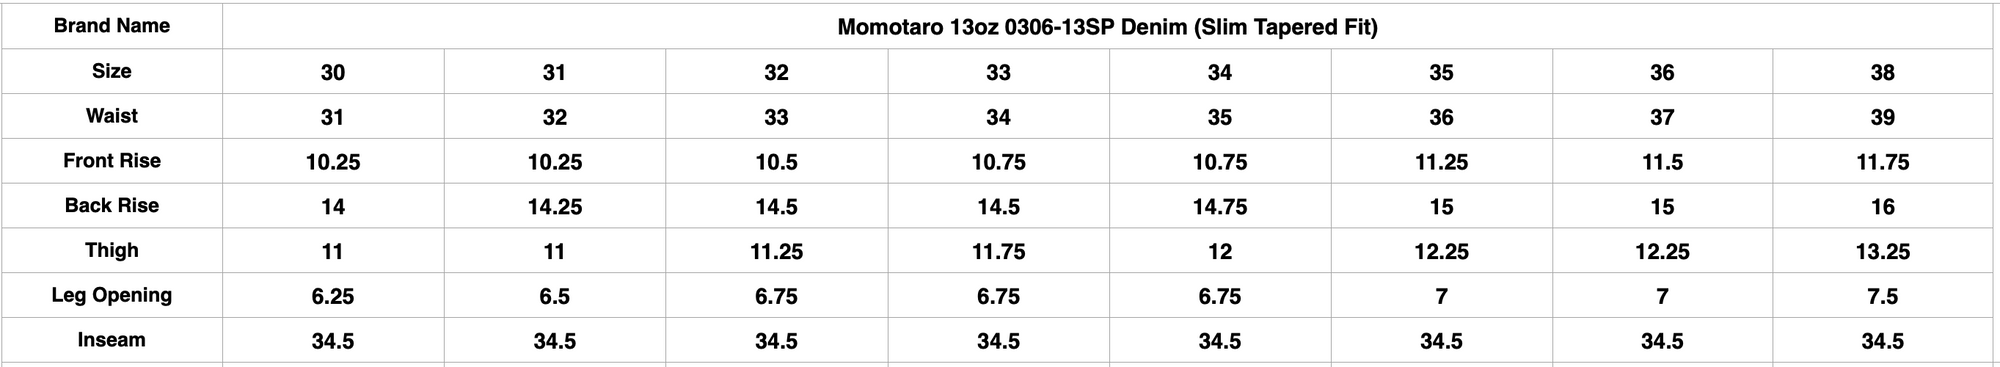 Momotaro 13oz 0306-13SP Denim (Slim Tapered Fit)